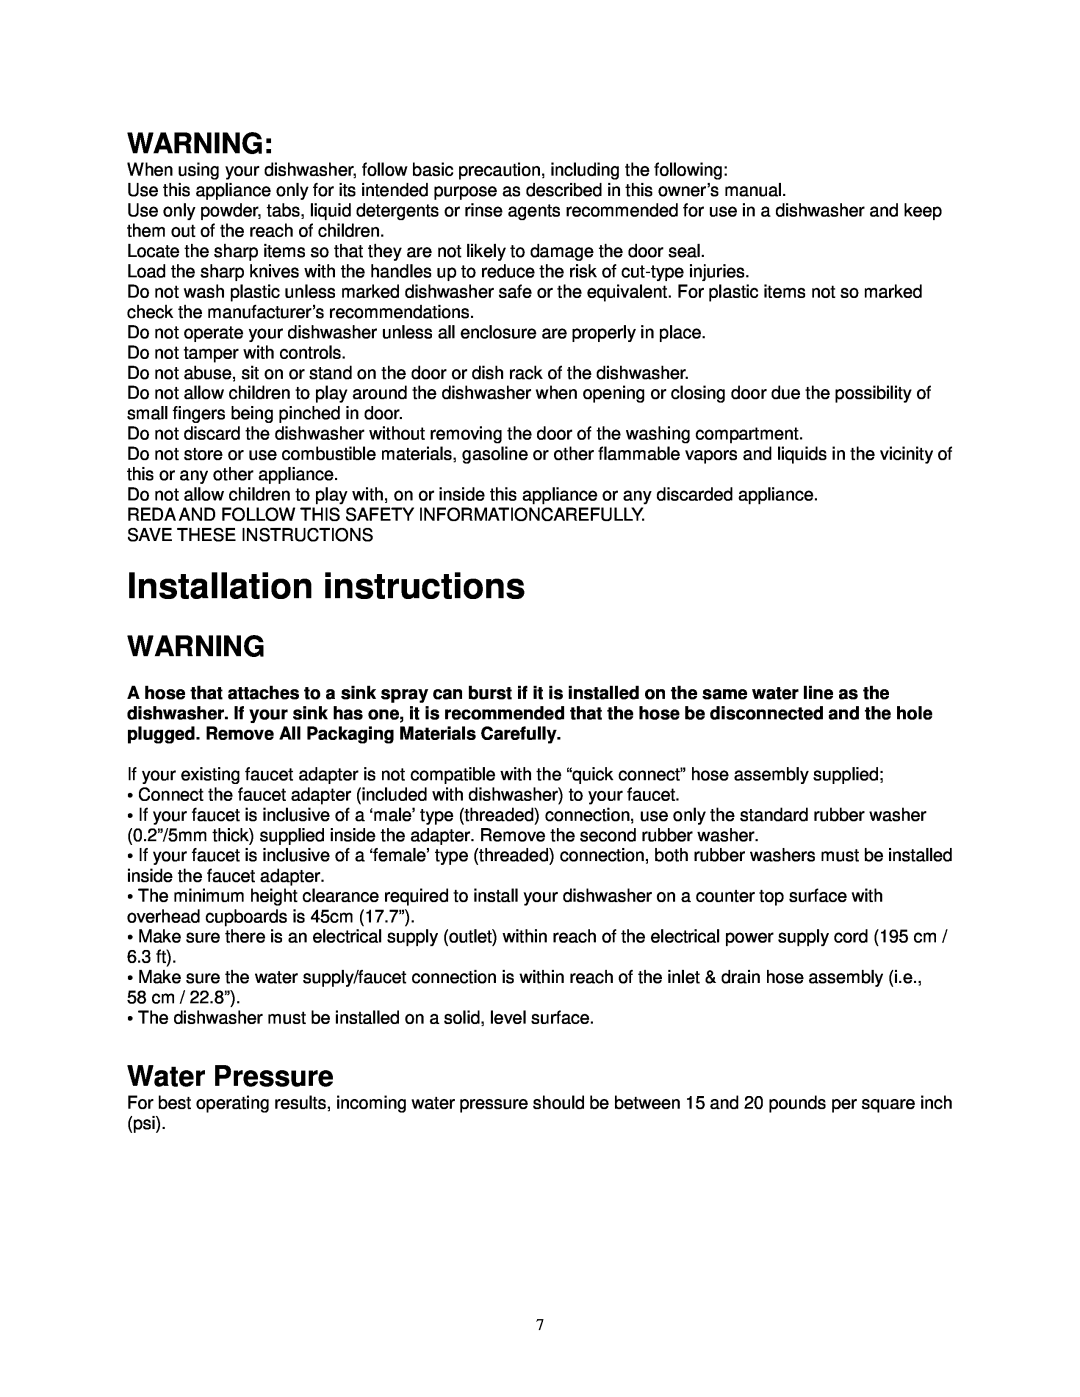 Avanti DW6W, DW6PS instruction manual Installation instructions, Water Pressure 